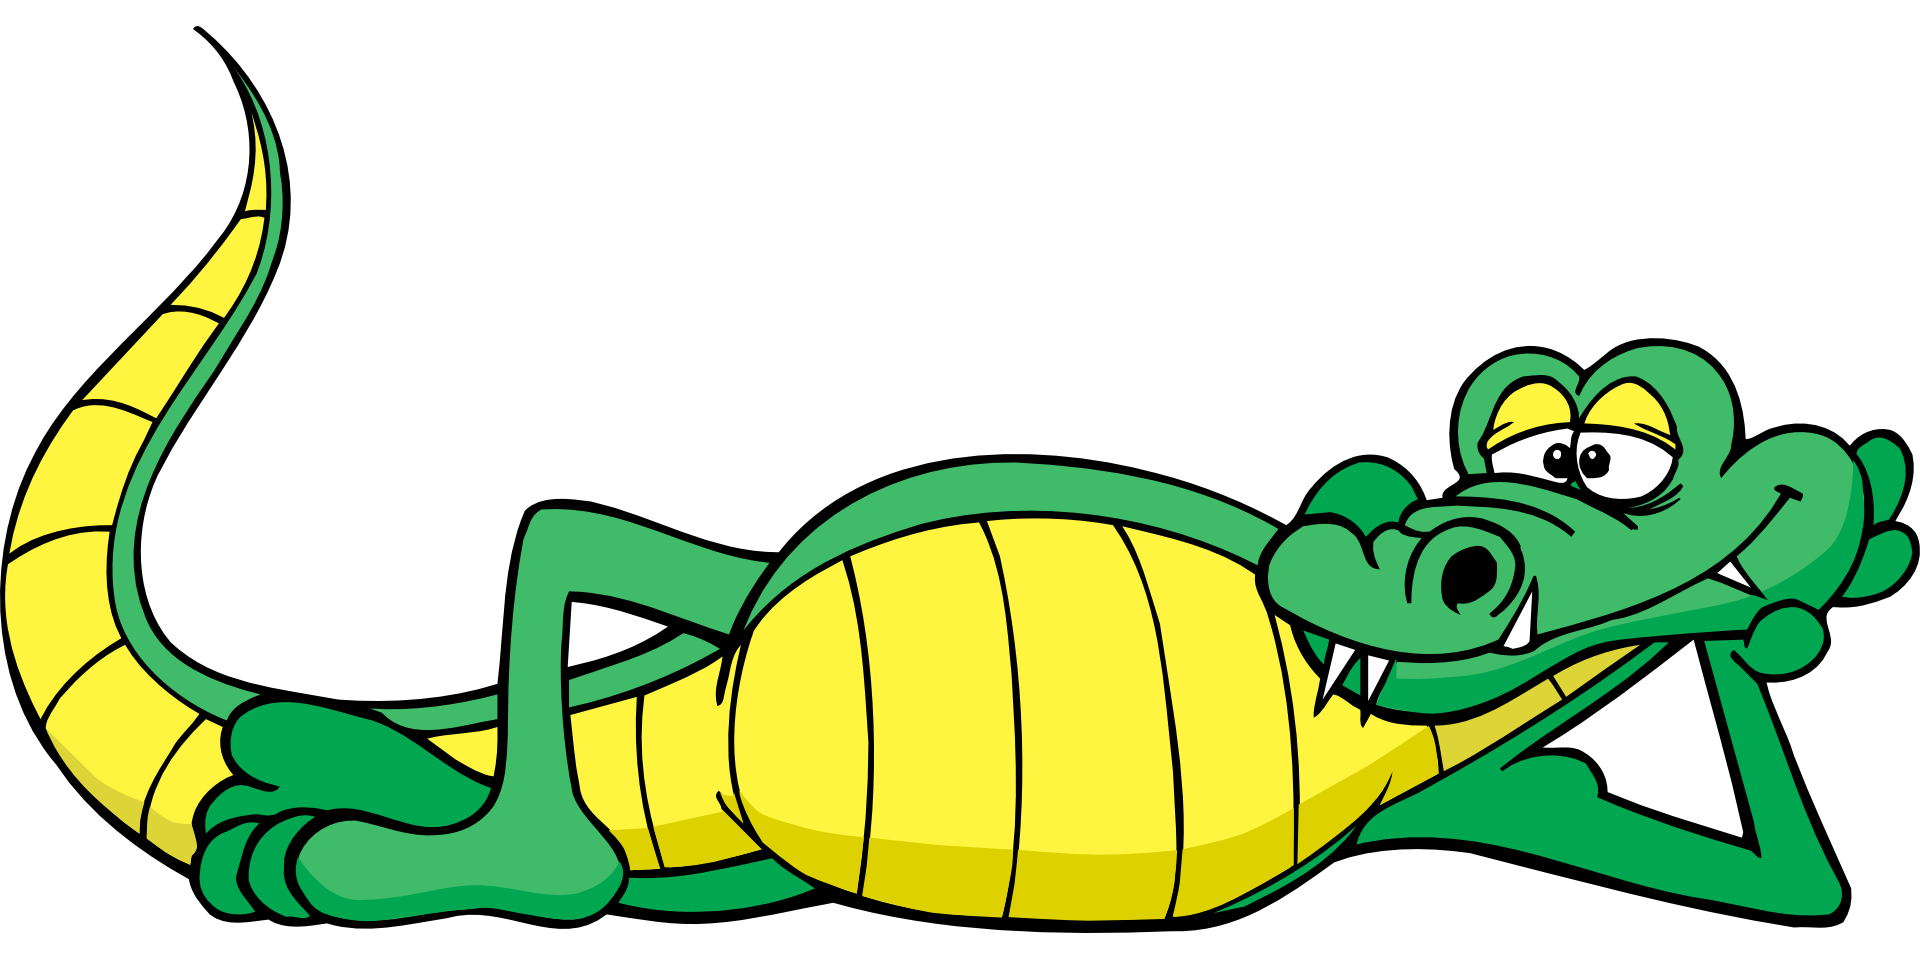 Free Cartoon Alligator, Download Free Cartoon Alligator png images